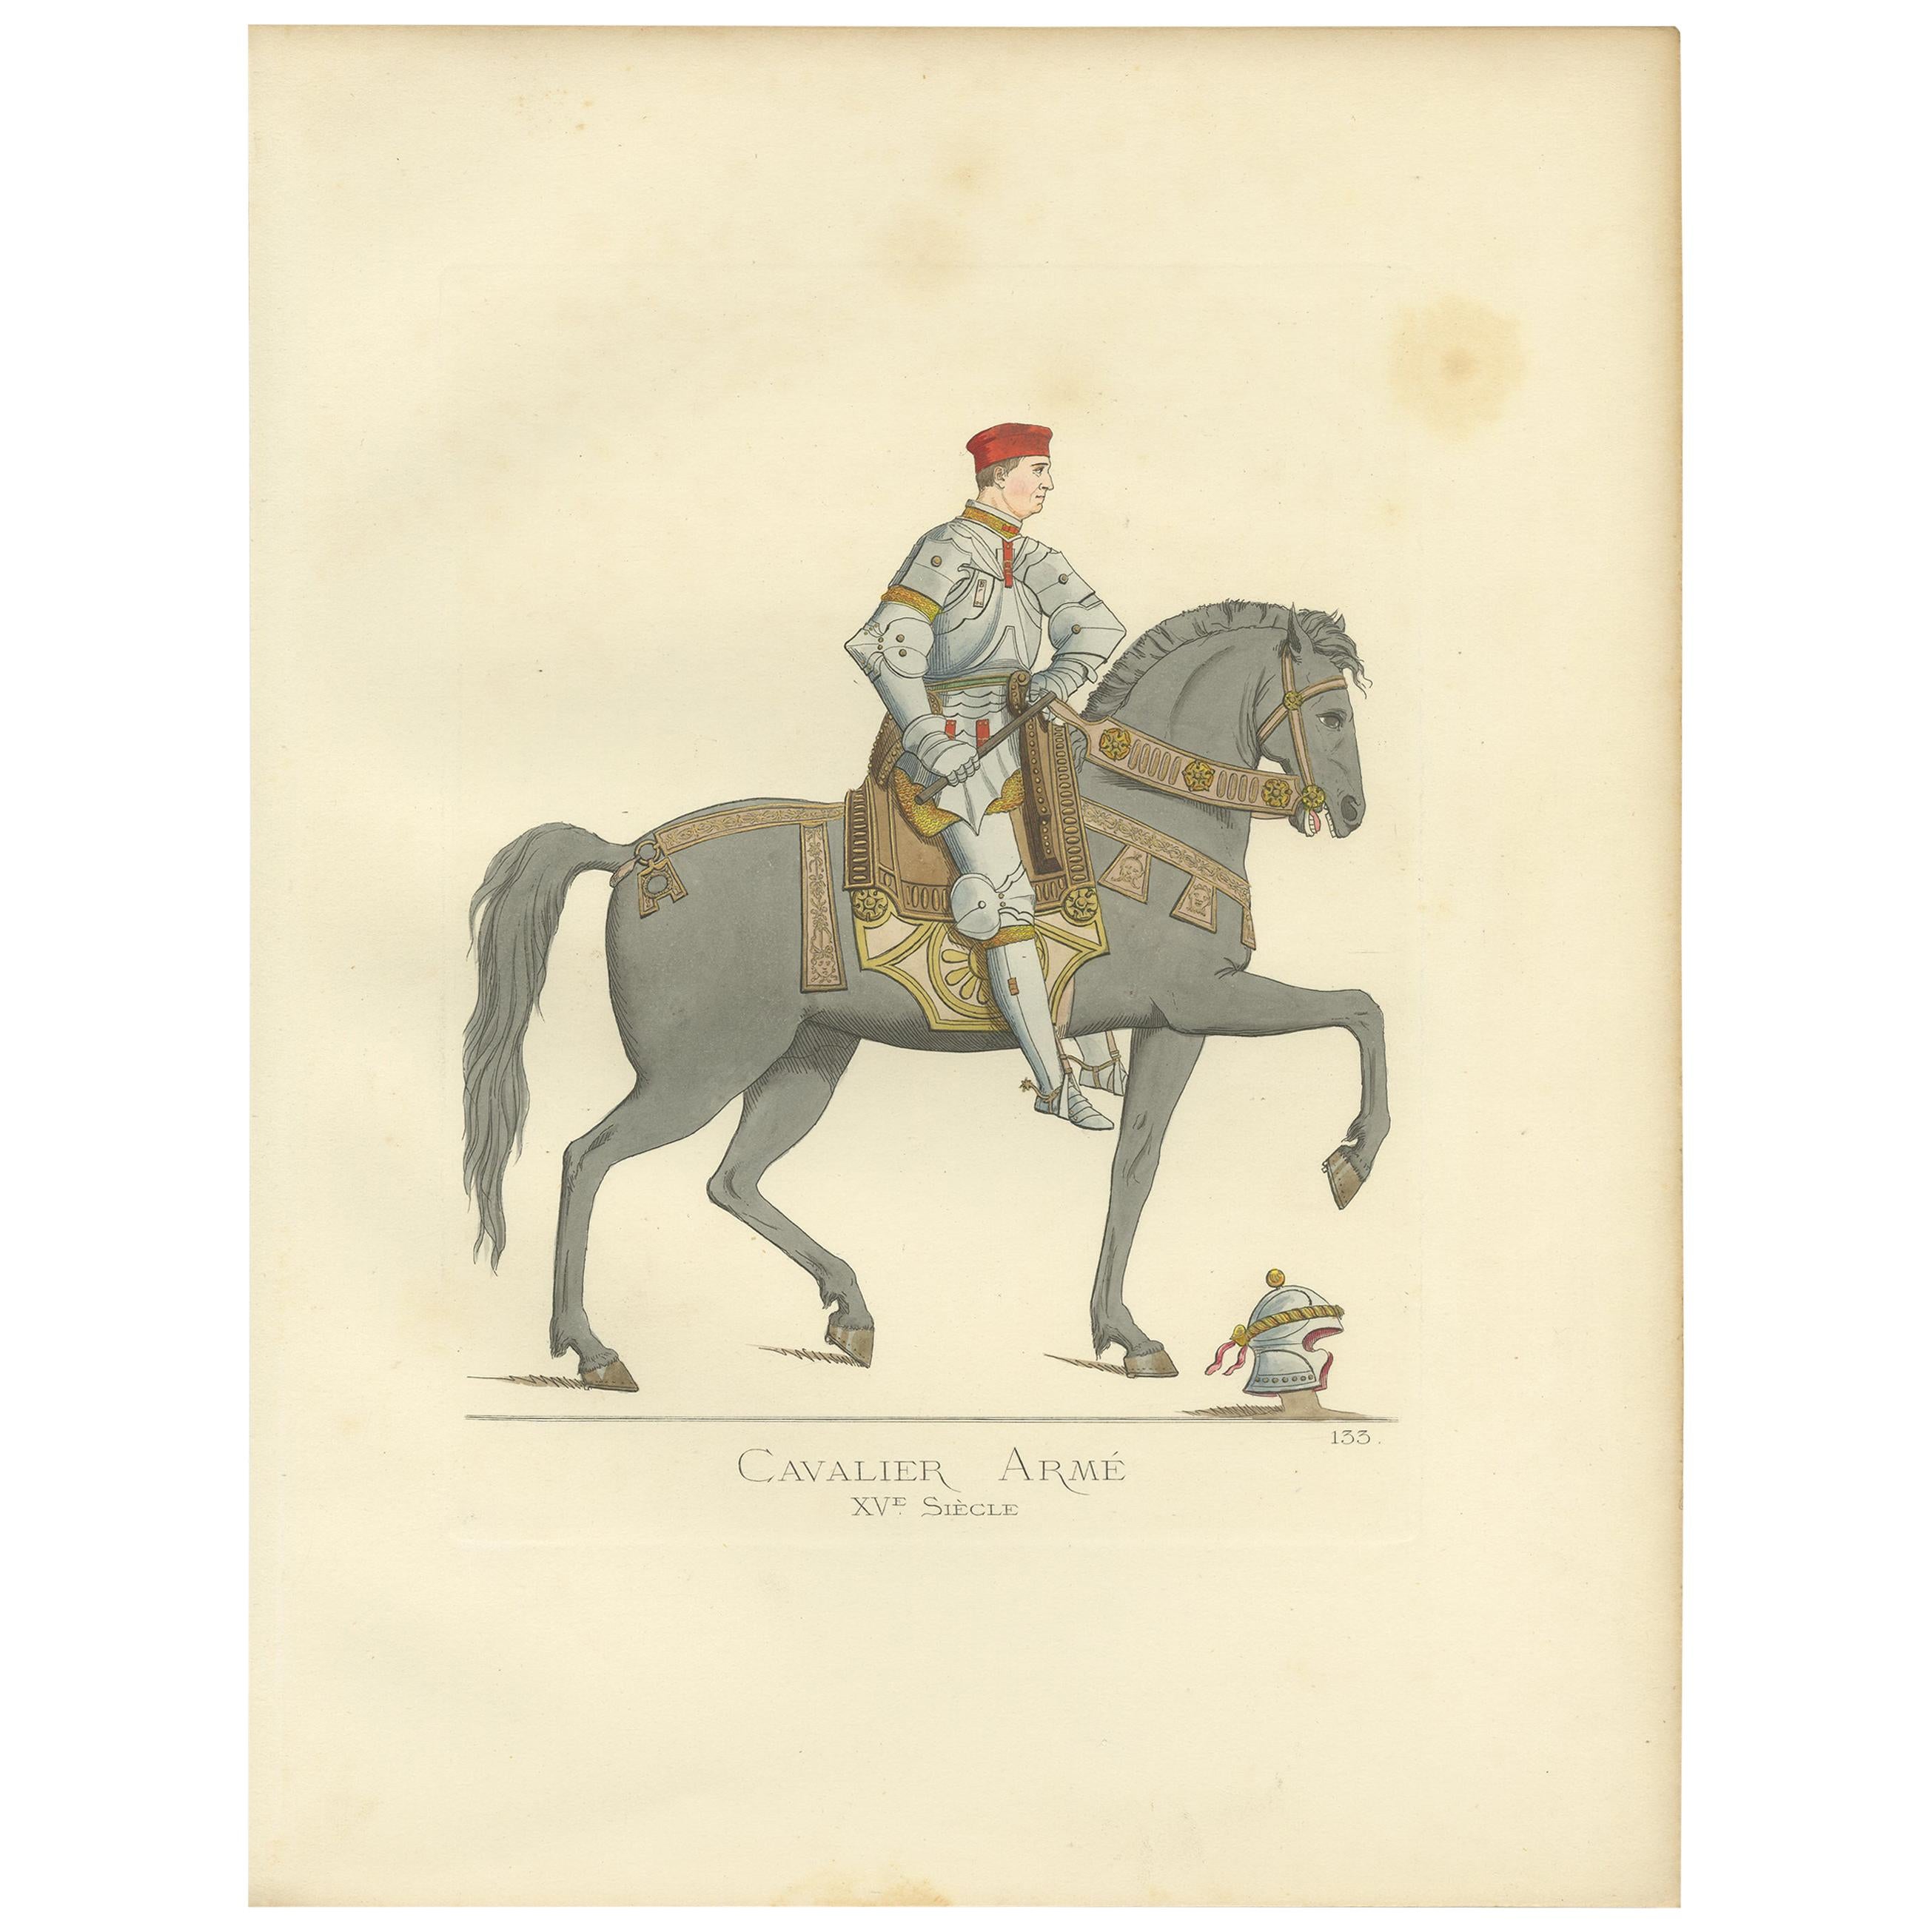 Antique print titled 'Cavalier Arme, XVe Siecle.’ Original antique print of a cavalry soldier, Italy, 15th century. This print originates from 'Costumes historiques de femmes du XIII, XIV et XV siècle' by C. Bonnard. Published, 1860.